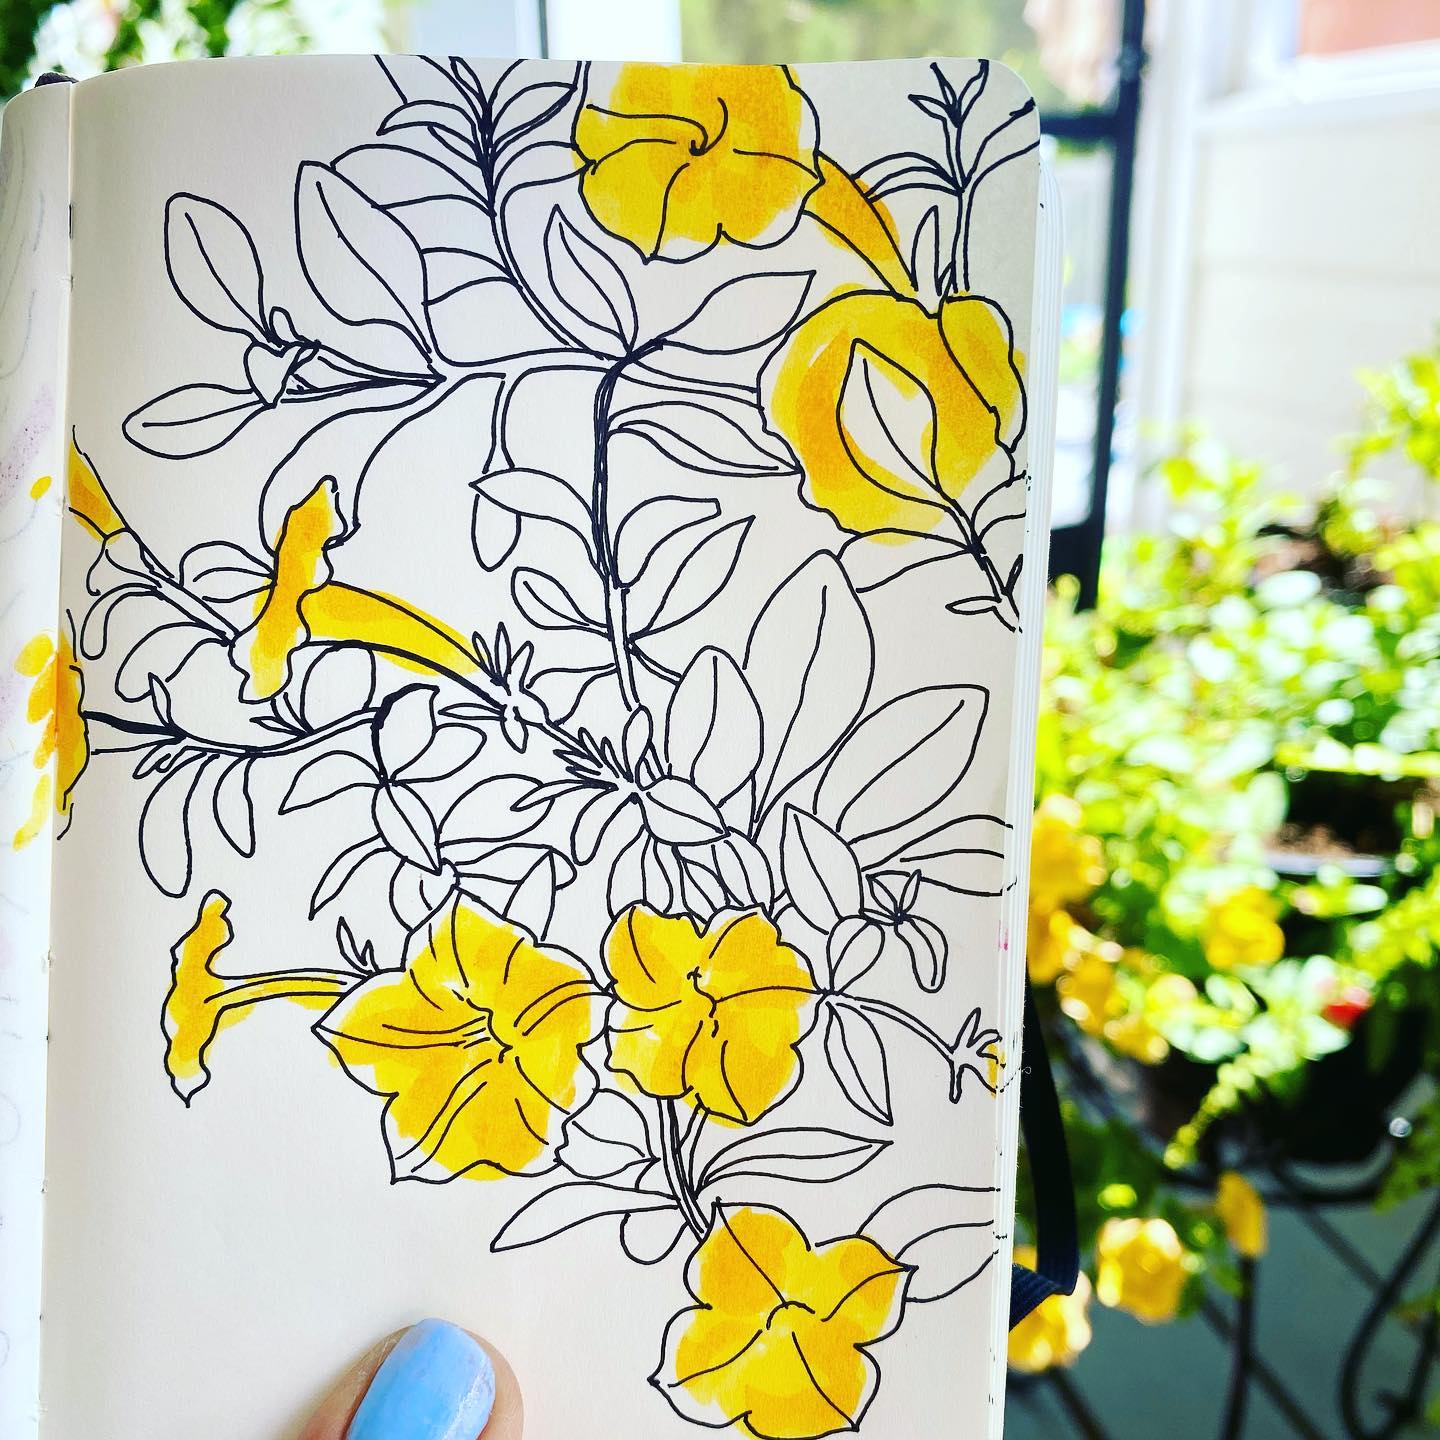 Yellow petunias do brighten up my living space.